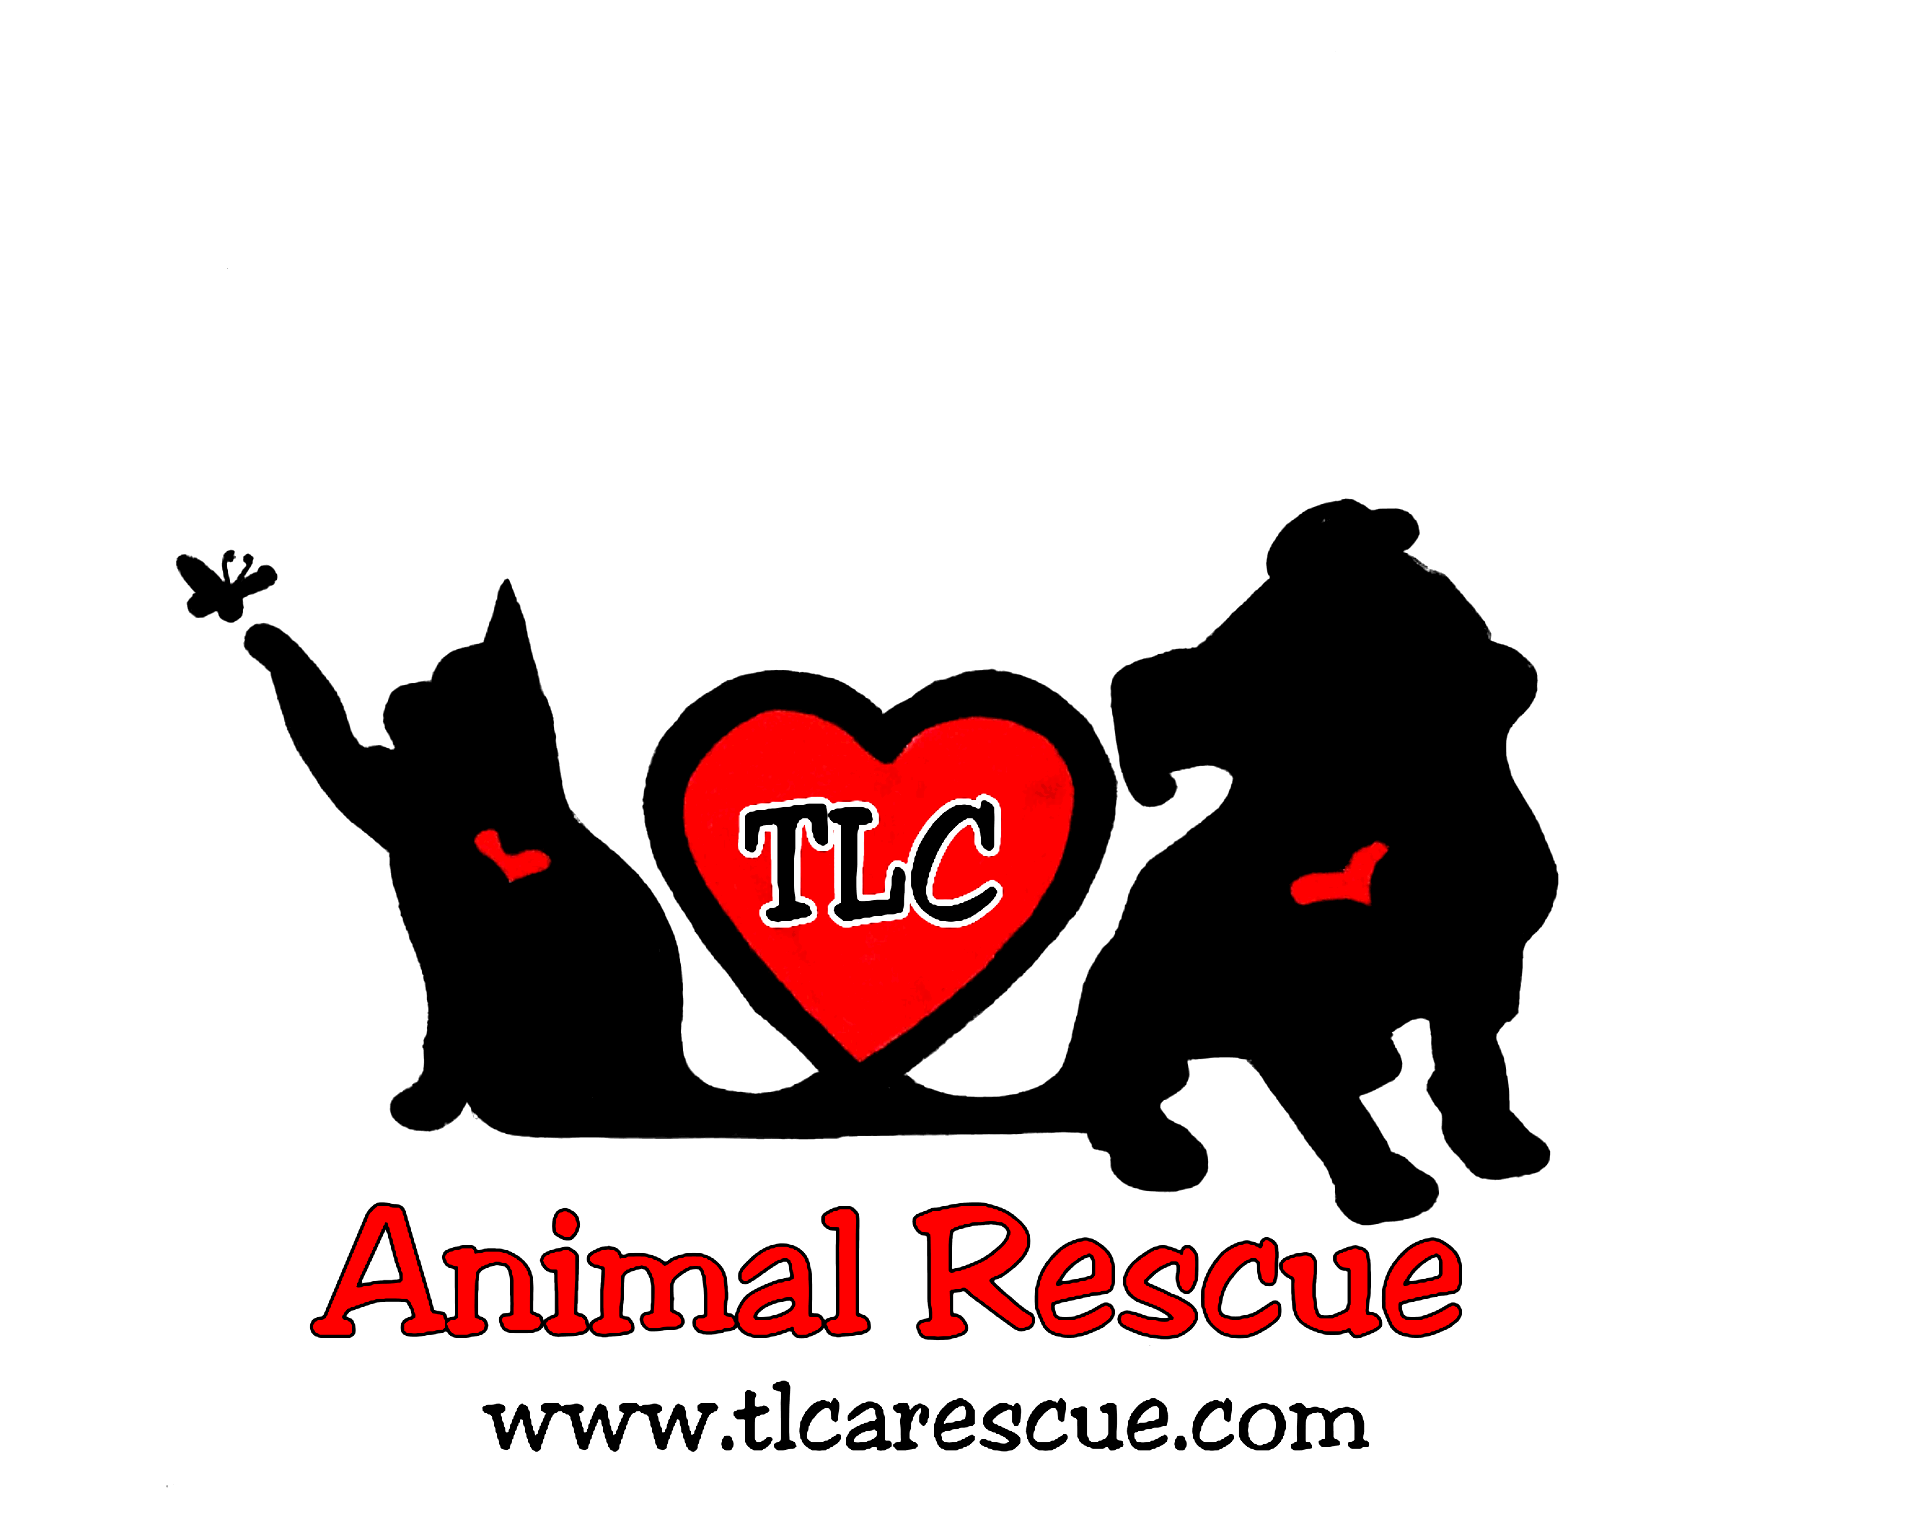 TLC Animal Rescue